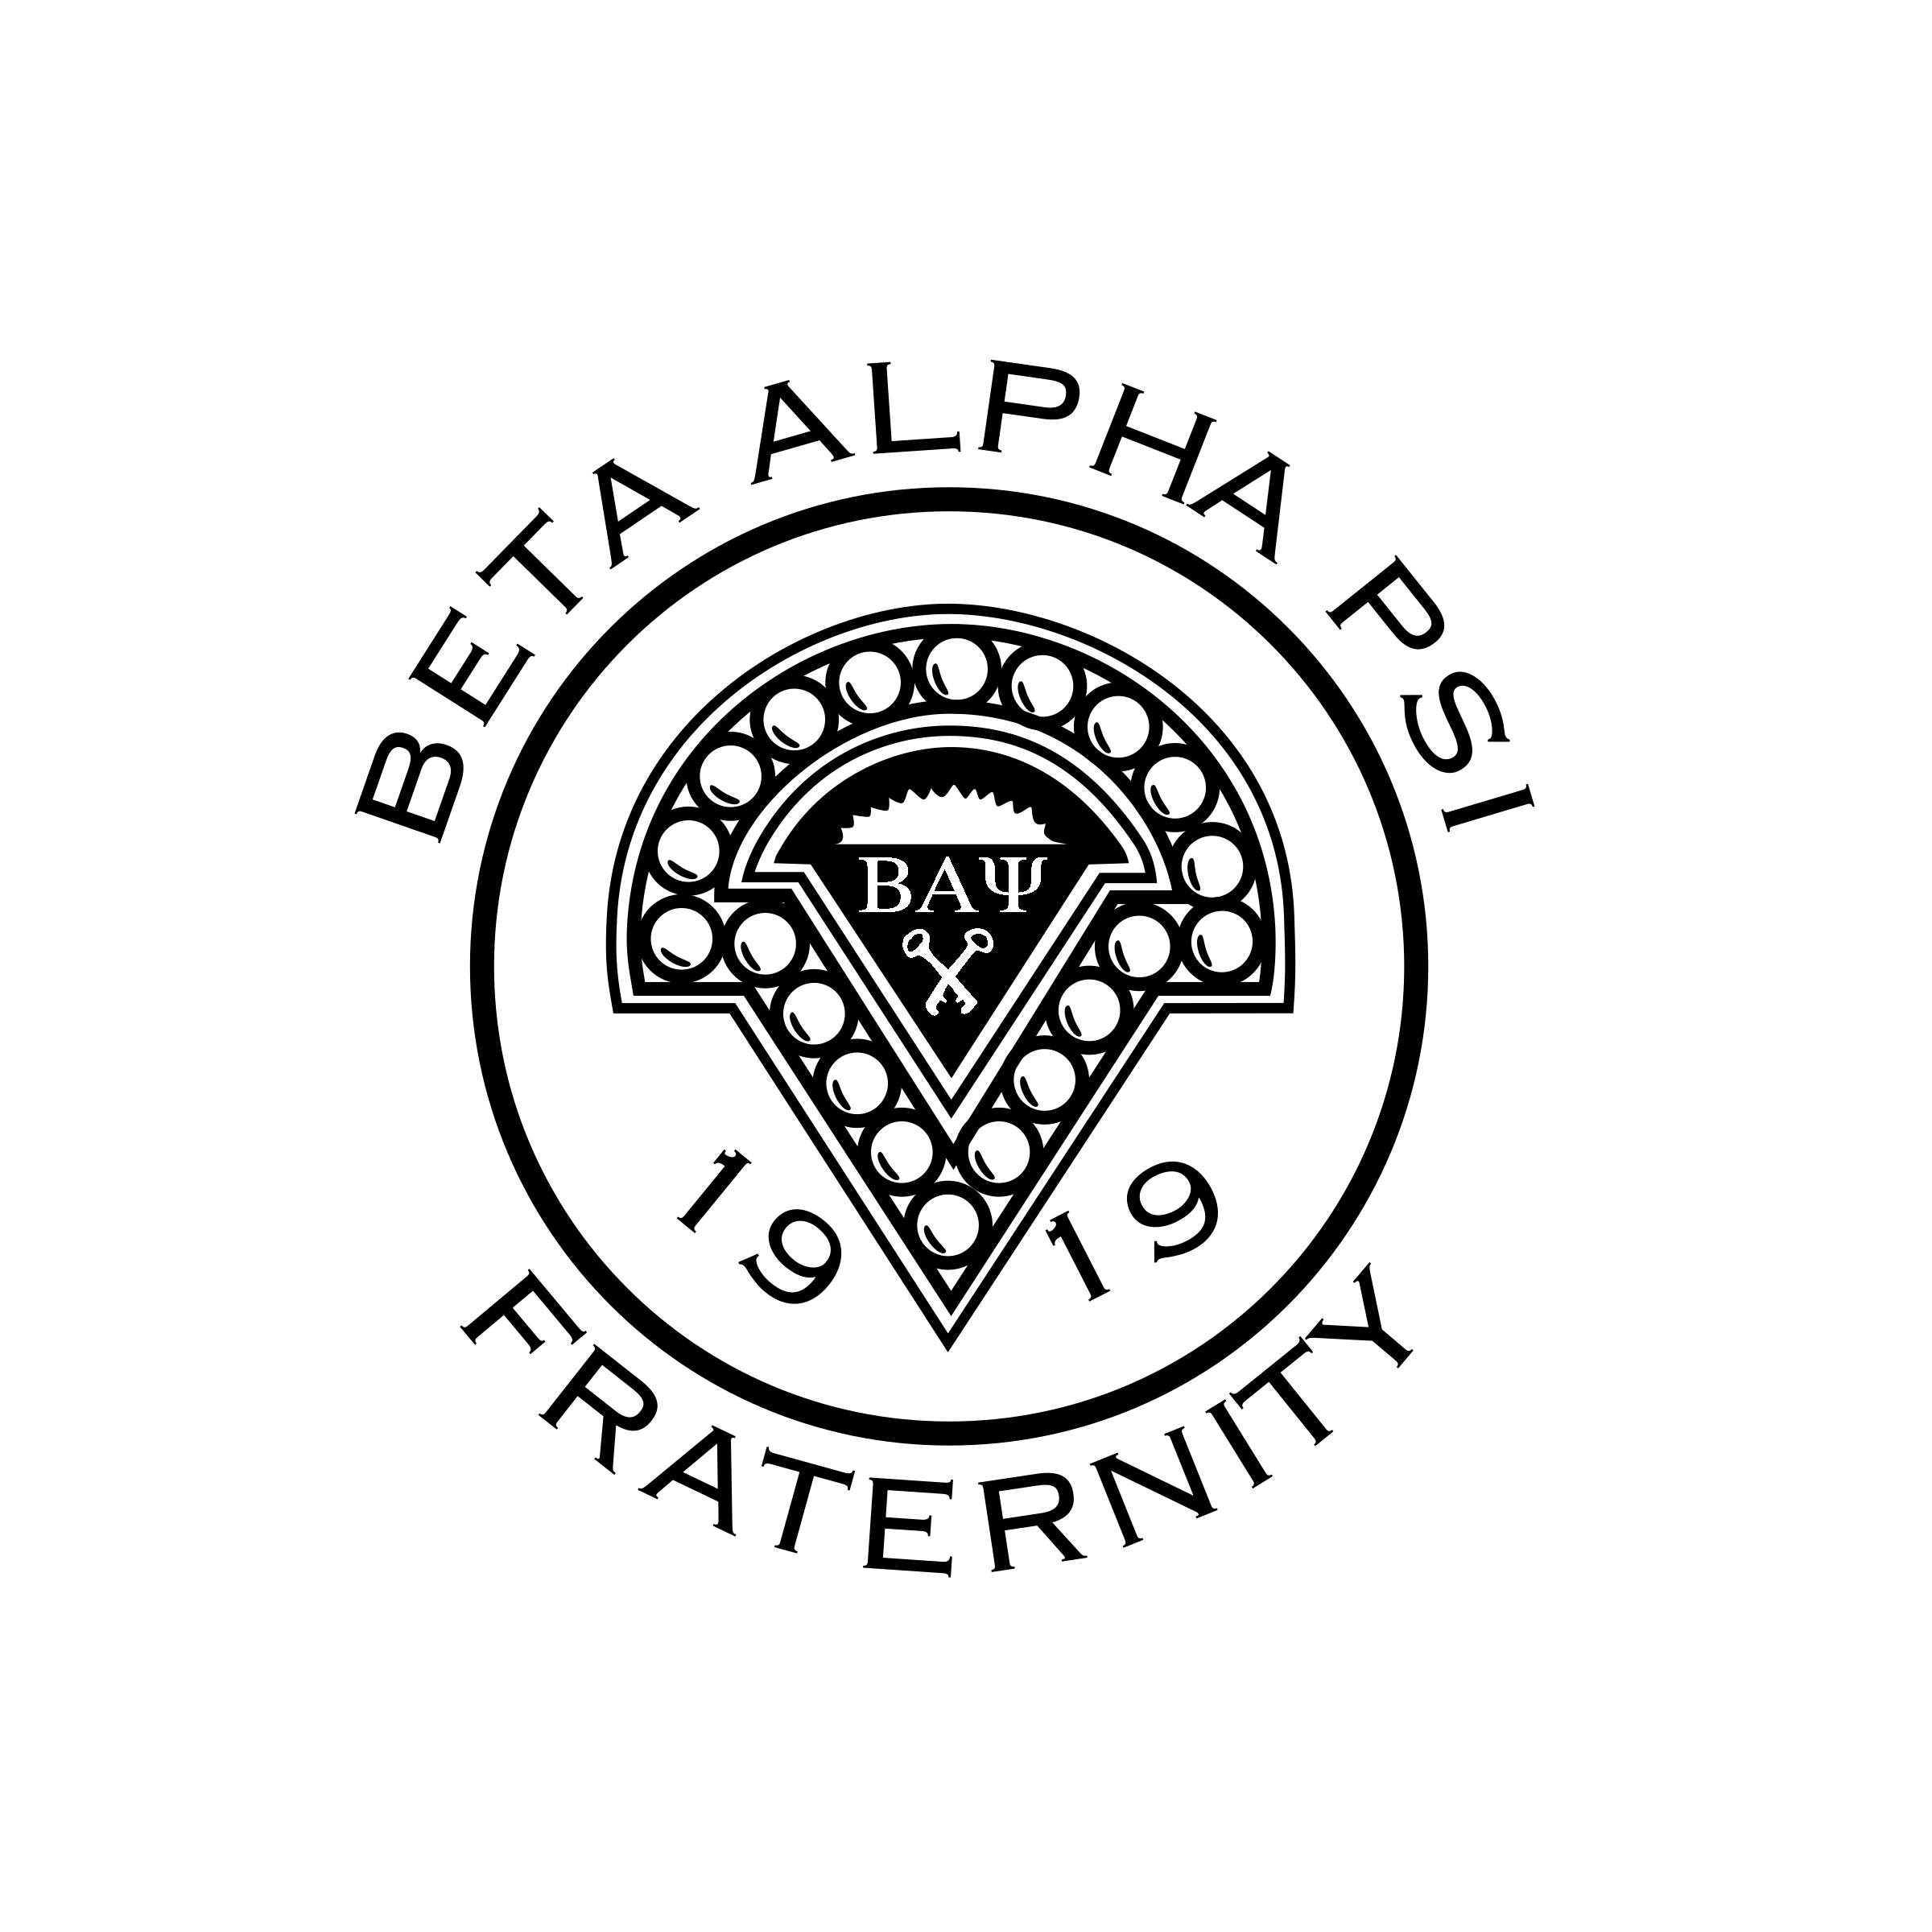 Beta Alpha Psi Logo - Beta Alpha PSI Fraternity Logo PNG Transparent & SVG Vector ...